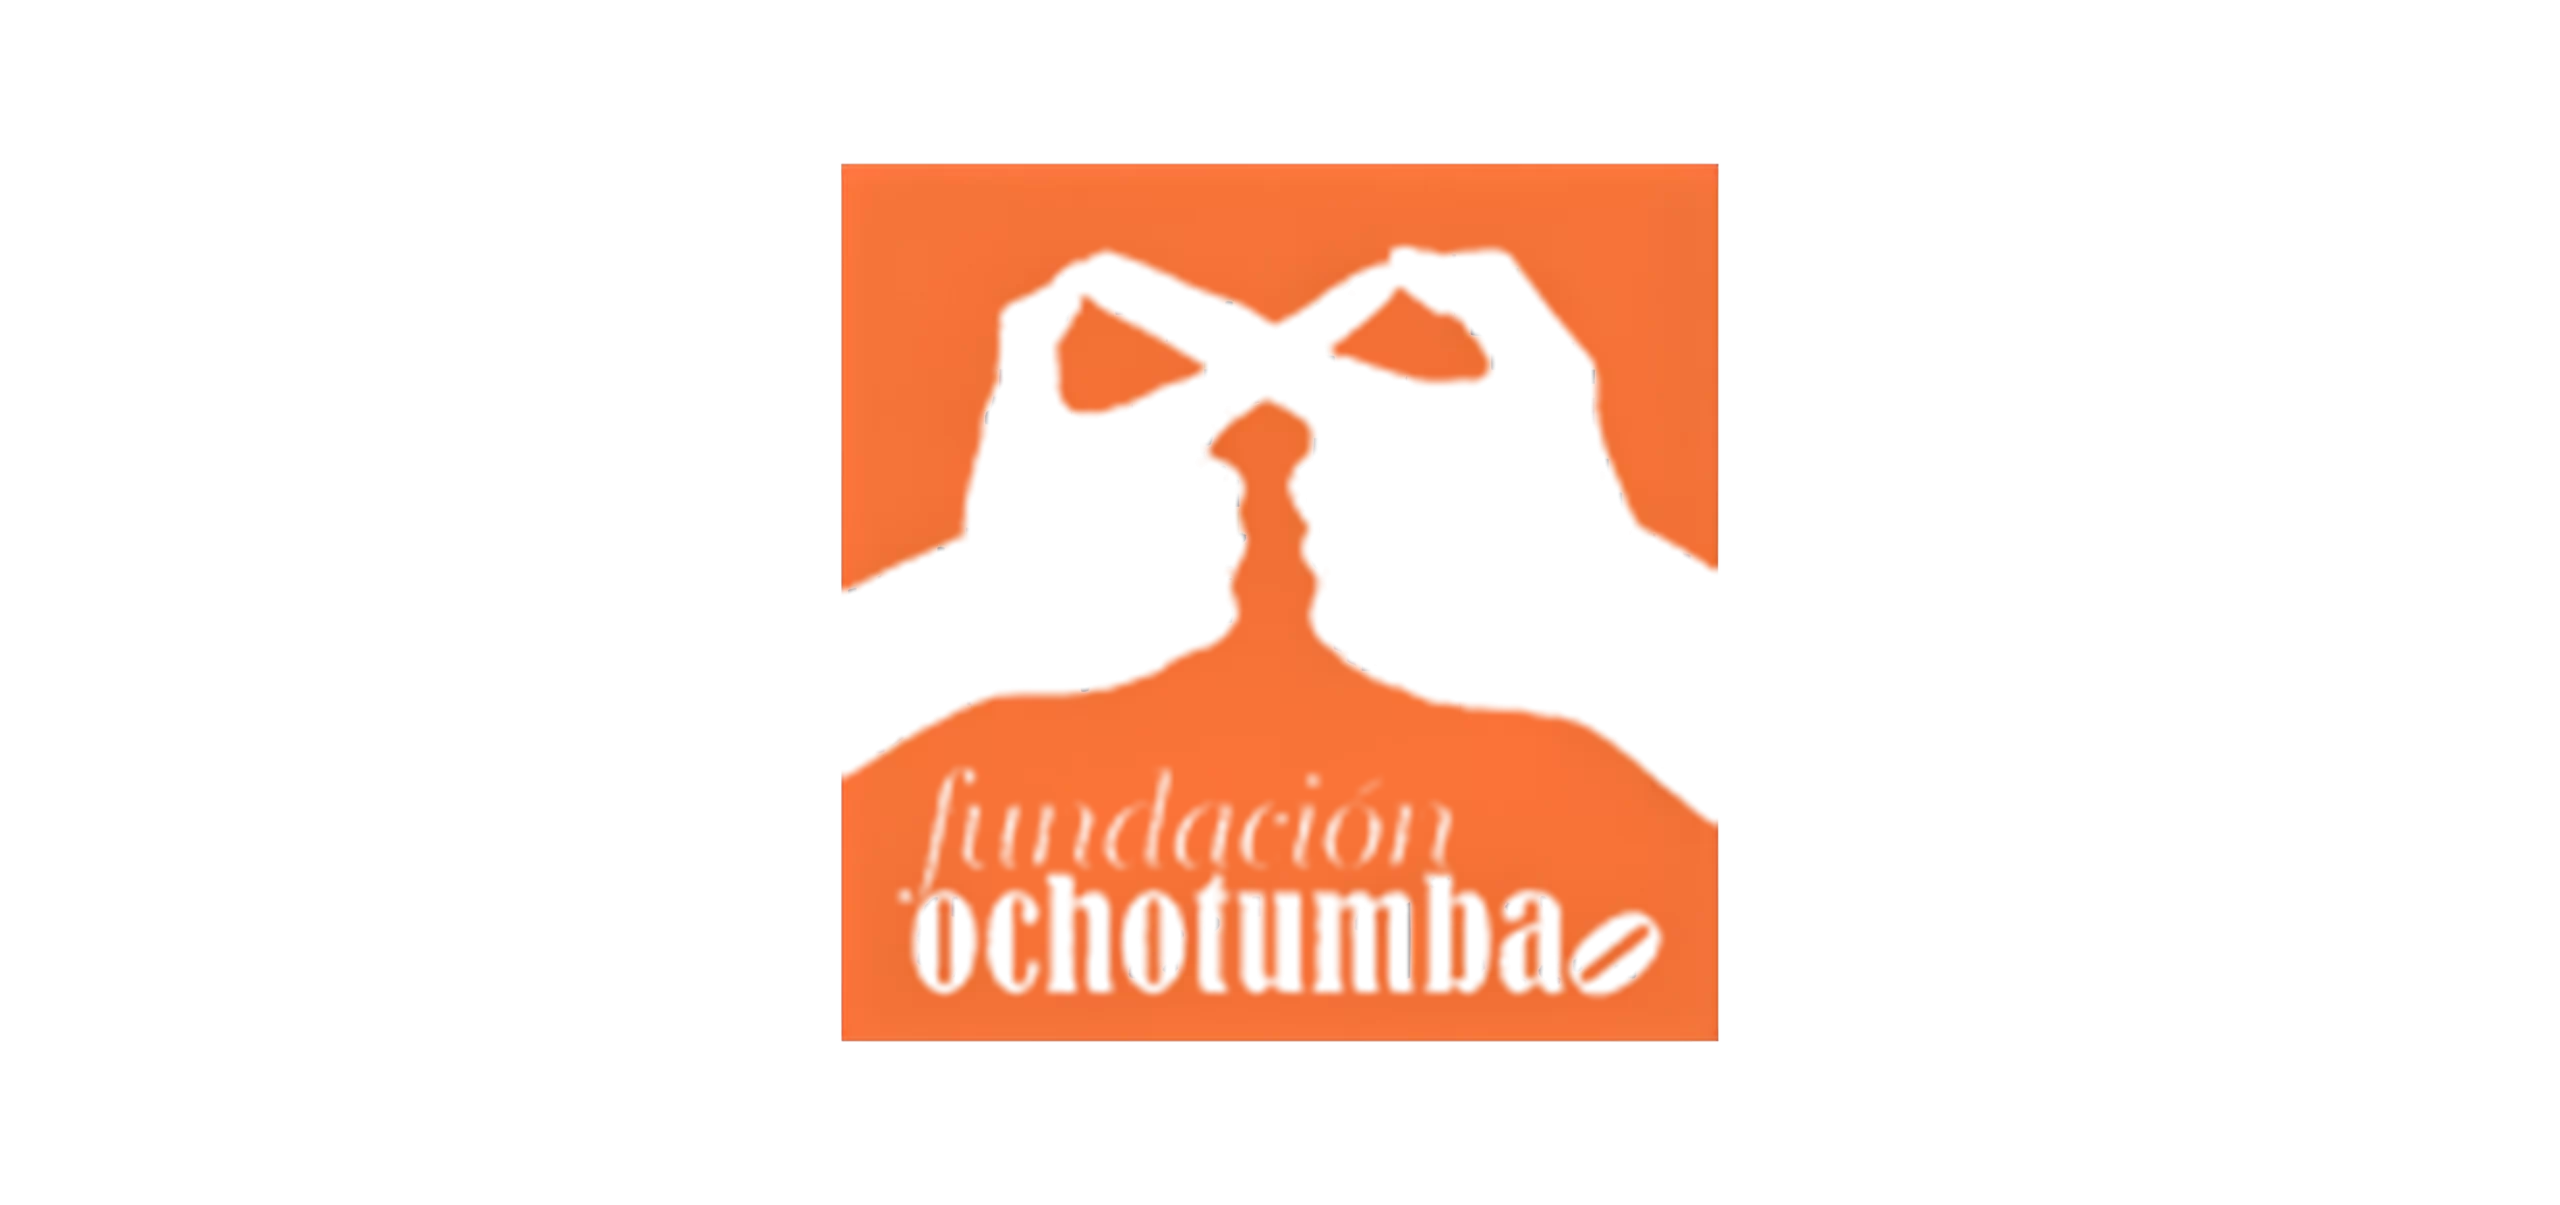 Fundación Ochotumbao logo